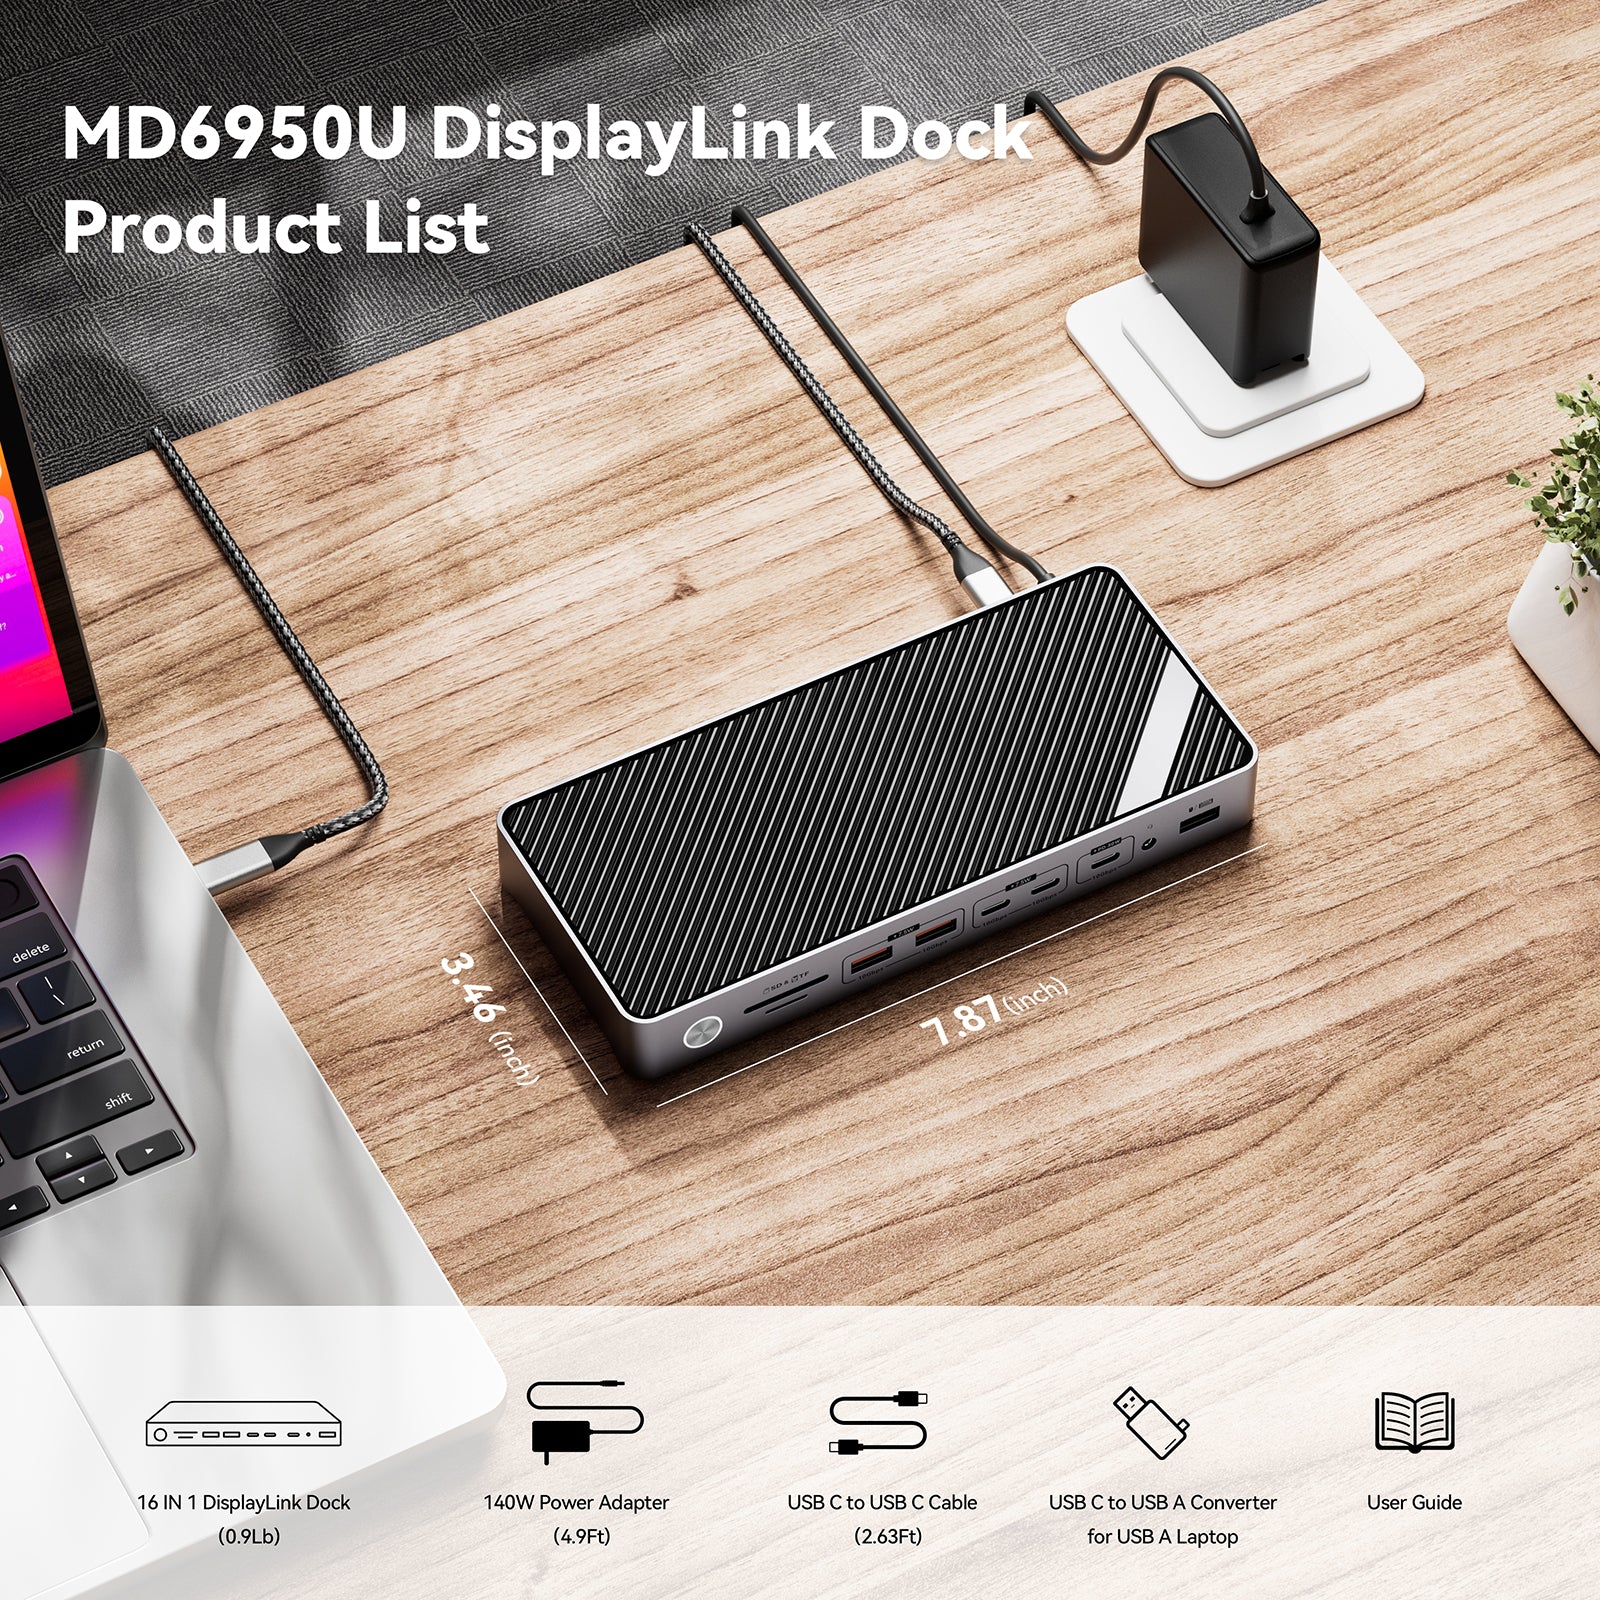 Minisopuru DisplayLink Docking Station 3 Monitors with 140W Power Adapter|MD6950U